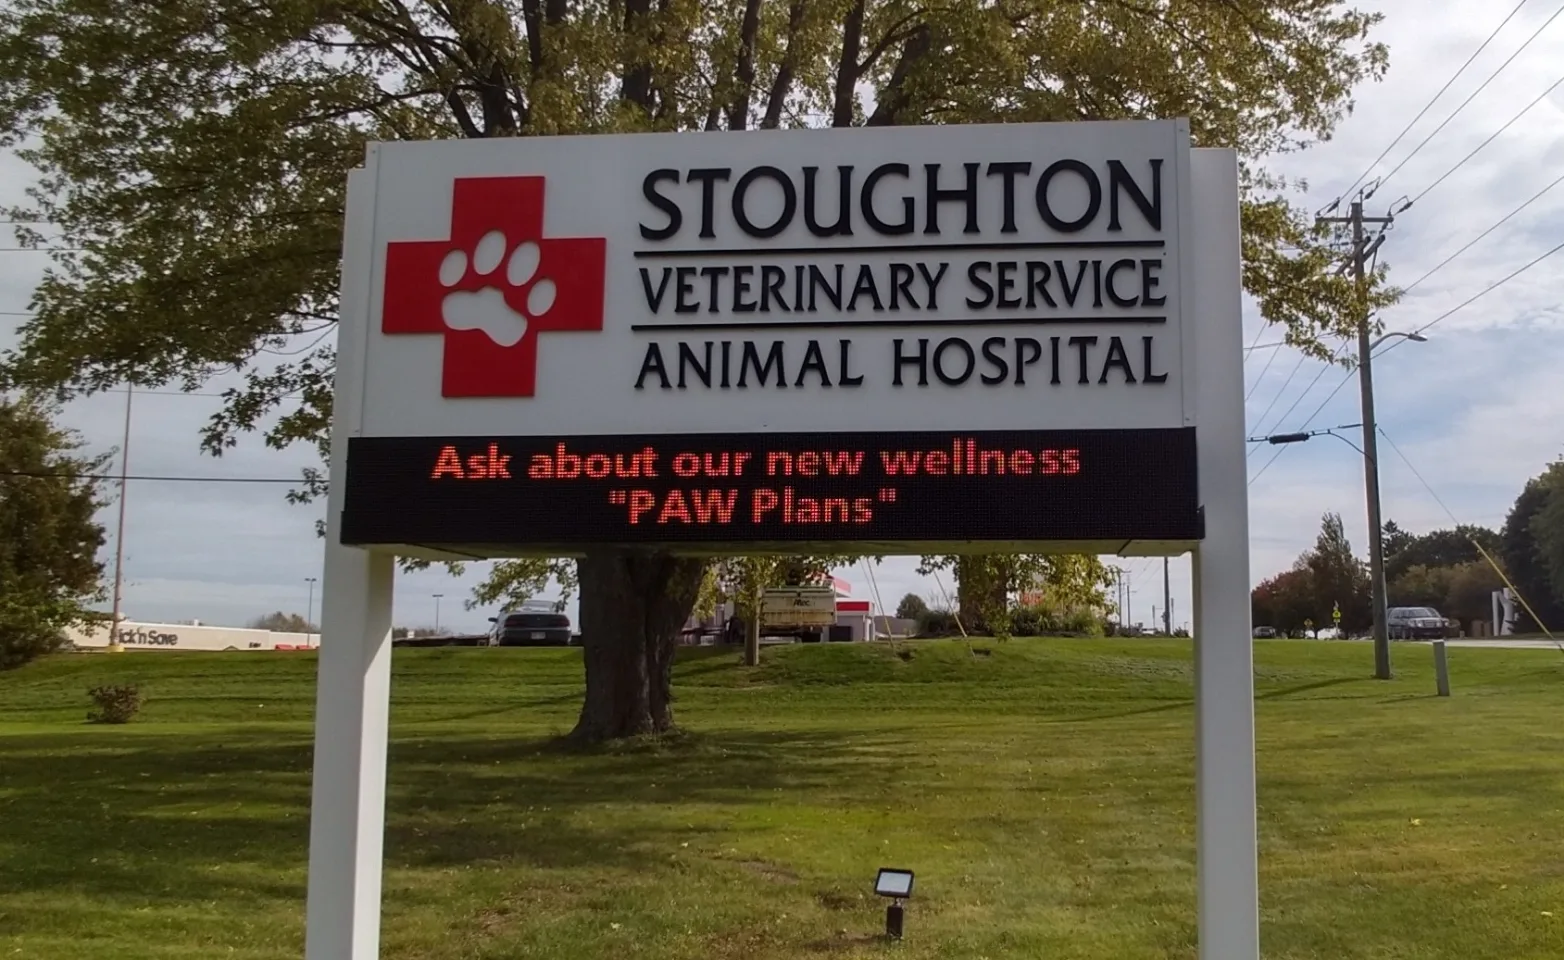 Stoughton exterior signage on lawn